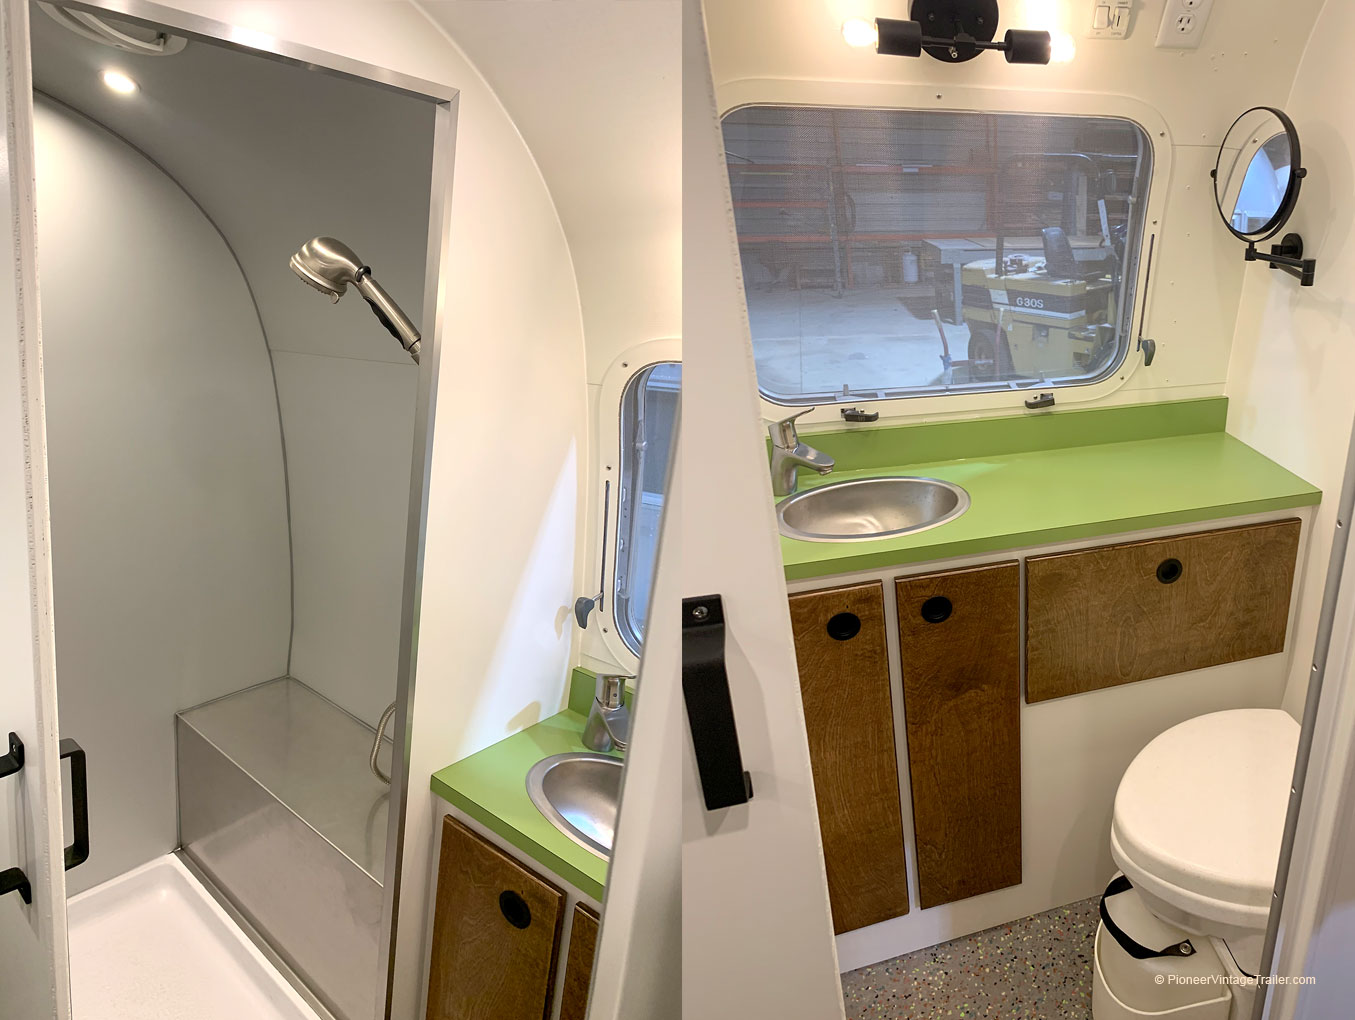 1969 Airstream Overlander bathroom and shower restoration